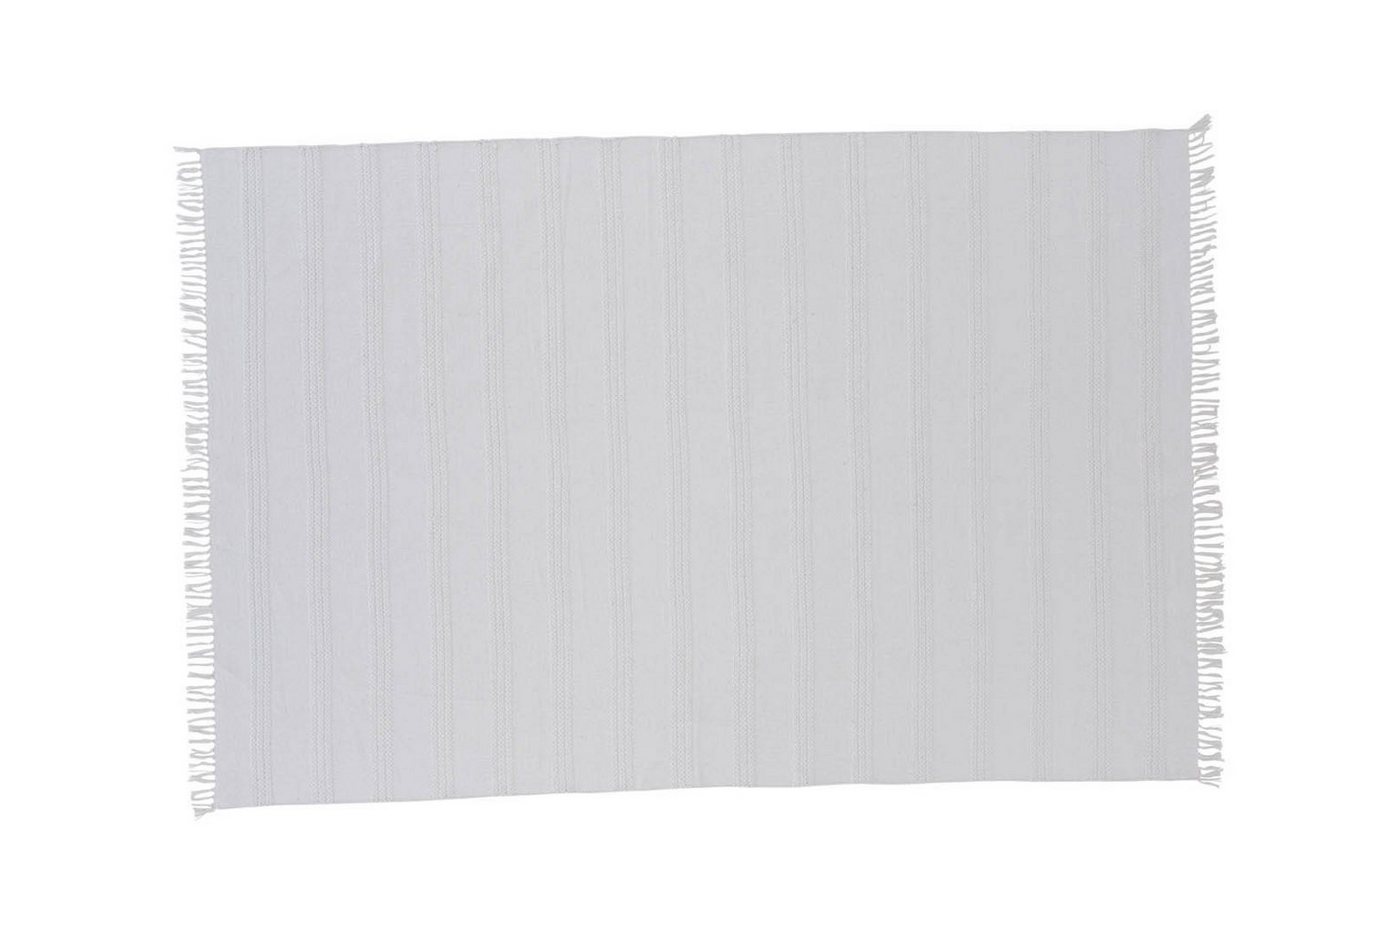 Teppich Nico Teppich 300x200 cm Baumwolle offwhite., ebuy24, Höhe: 1 mm von ebuy24